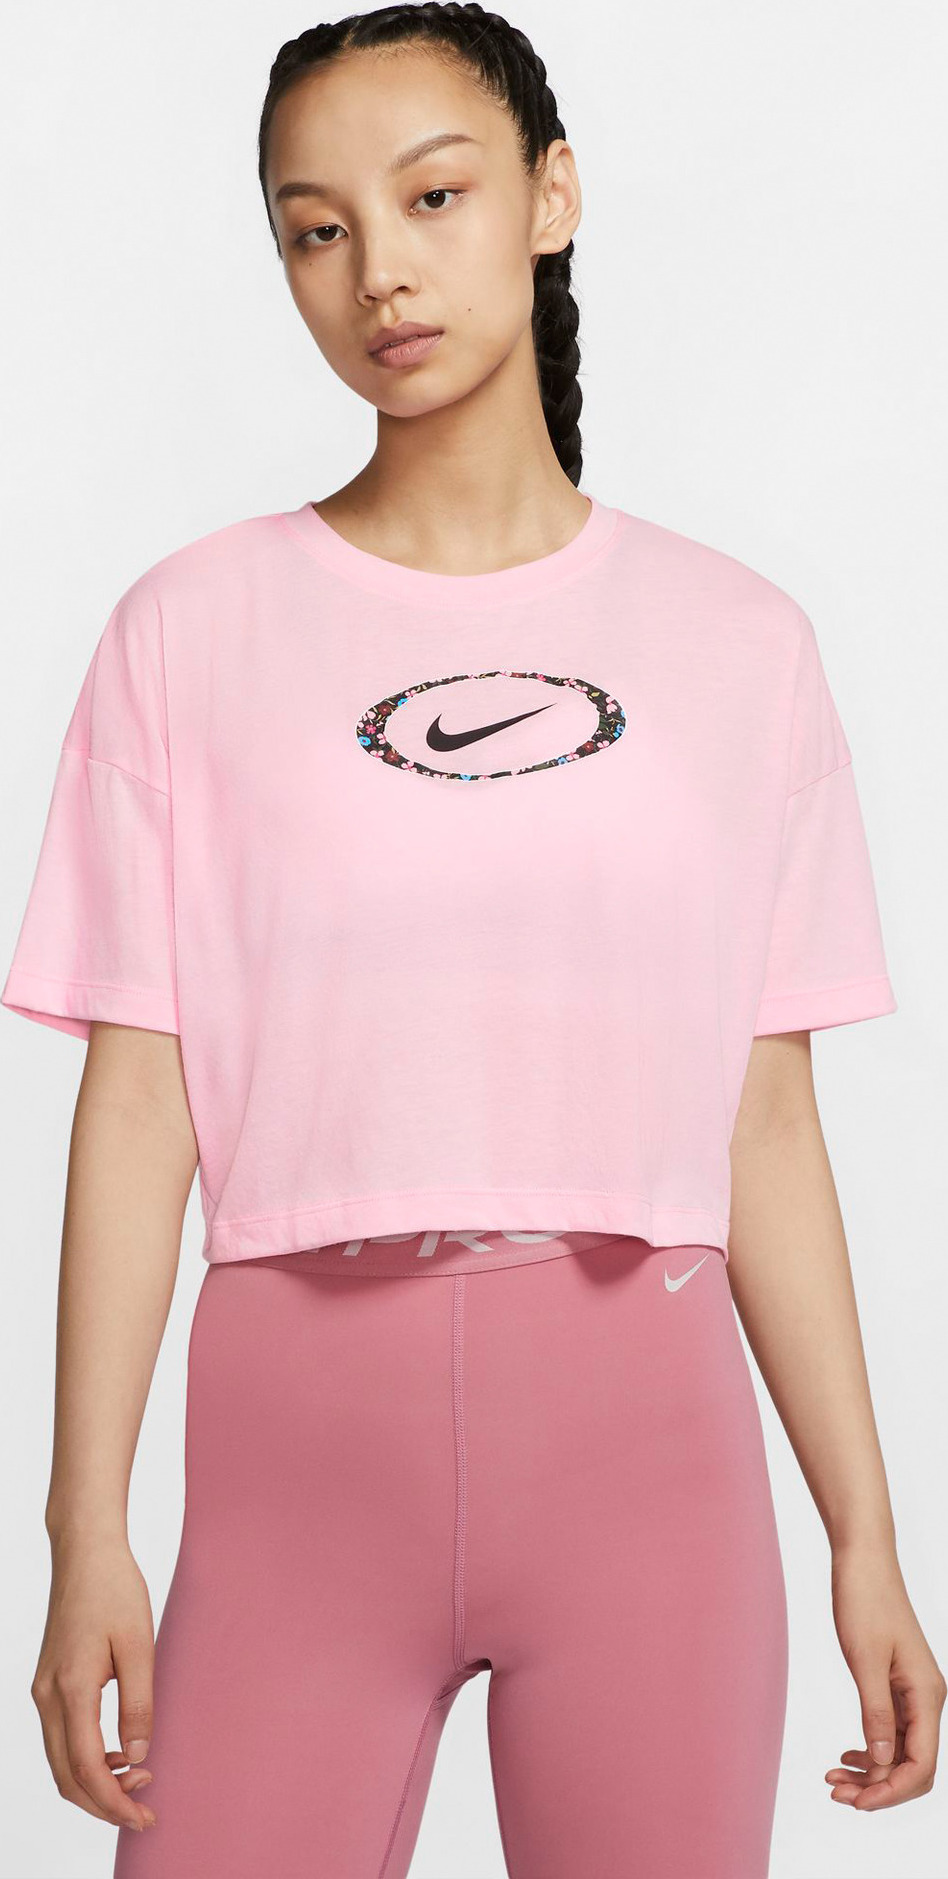 Dri-Fit Crop top Nike Růžová Nike